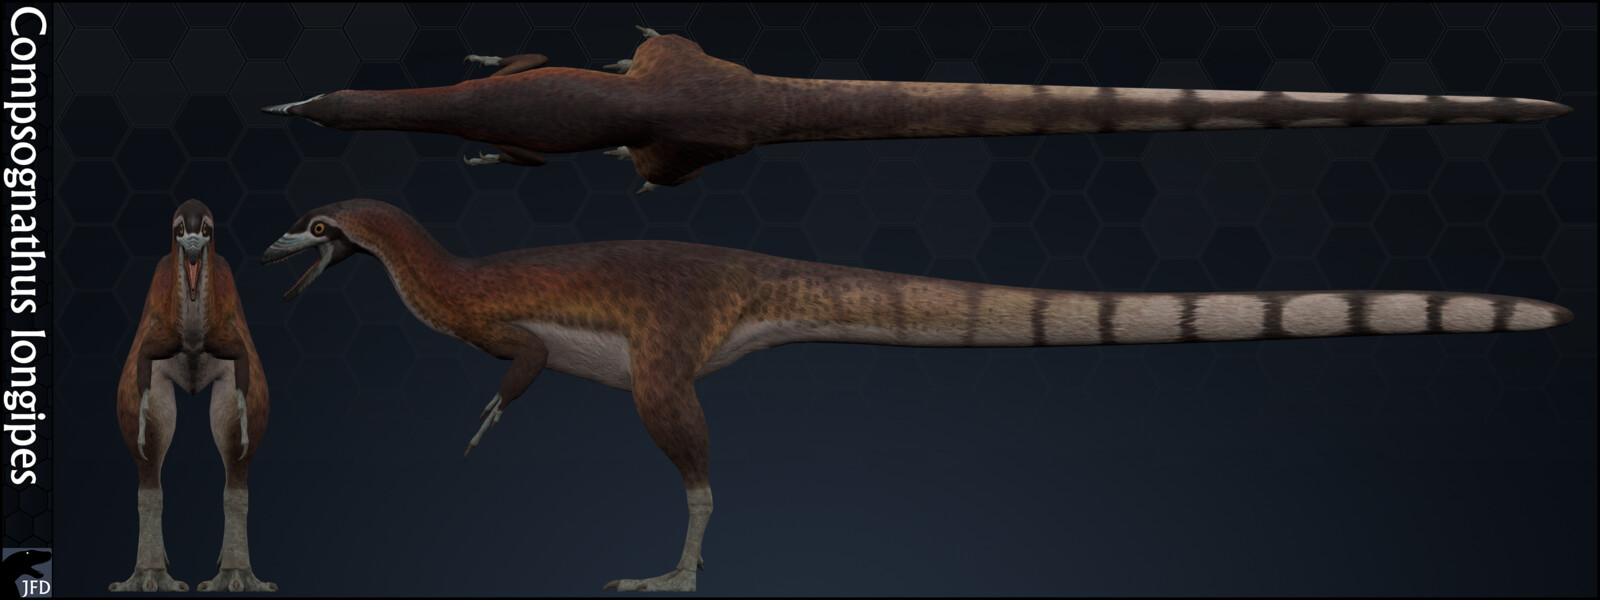 Compsognathus longipes multi-view render.